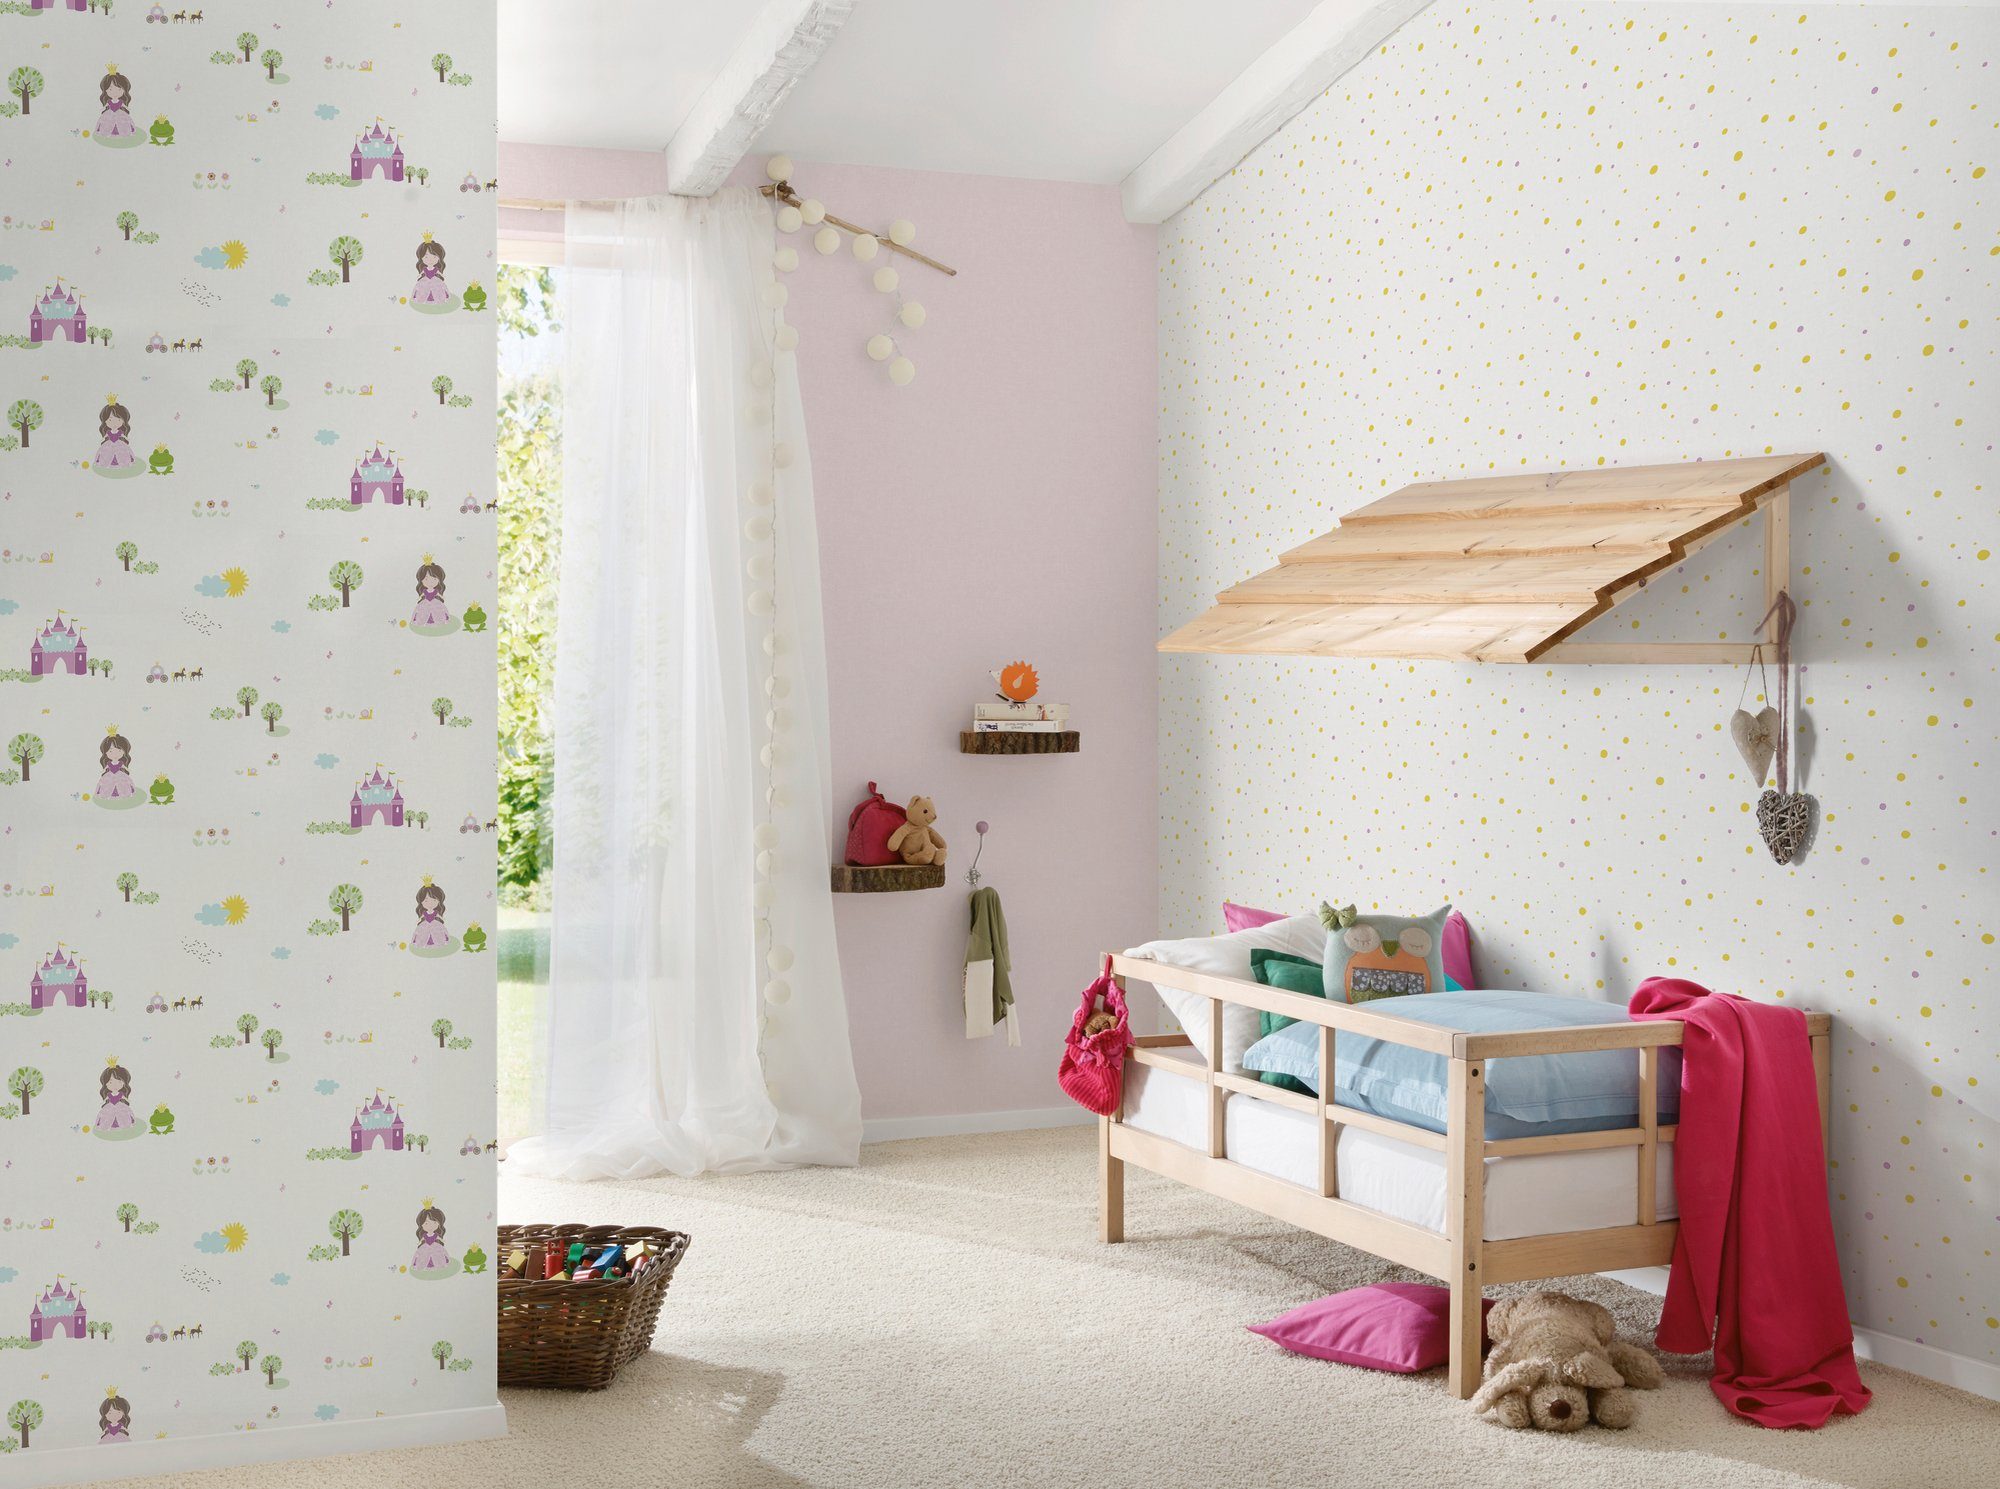 living walls Vliestapete Metallic Little gepunktet, glatt, weiß/braun/rosa Kinderzimmer Punkte Tapete Stars